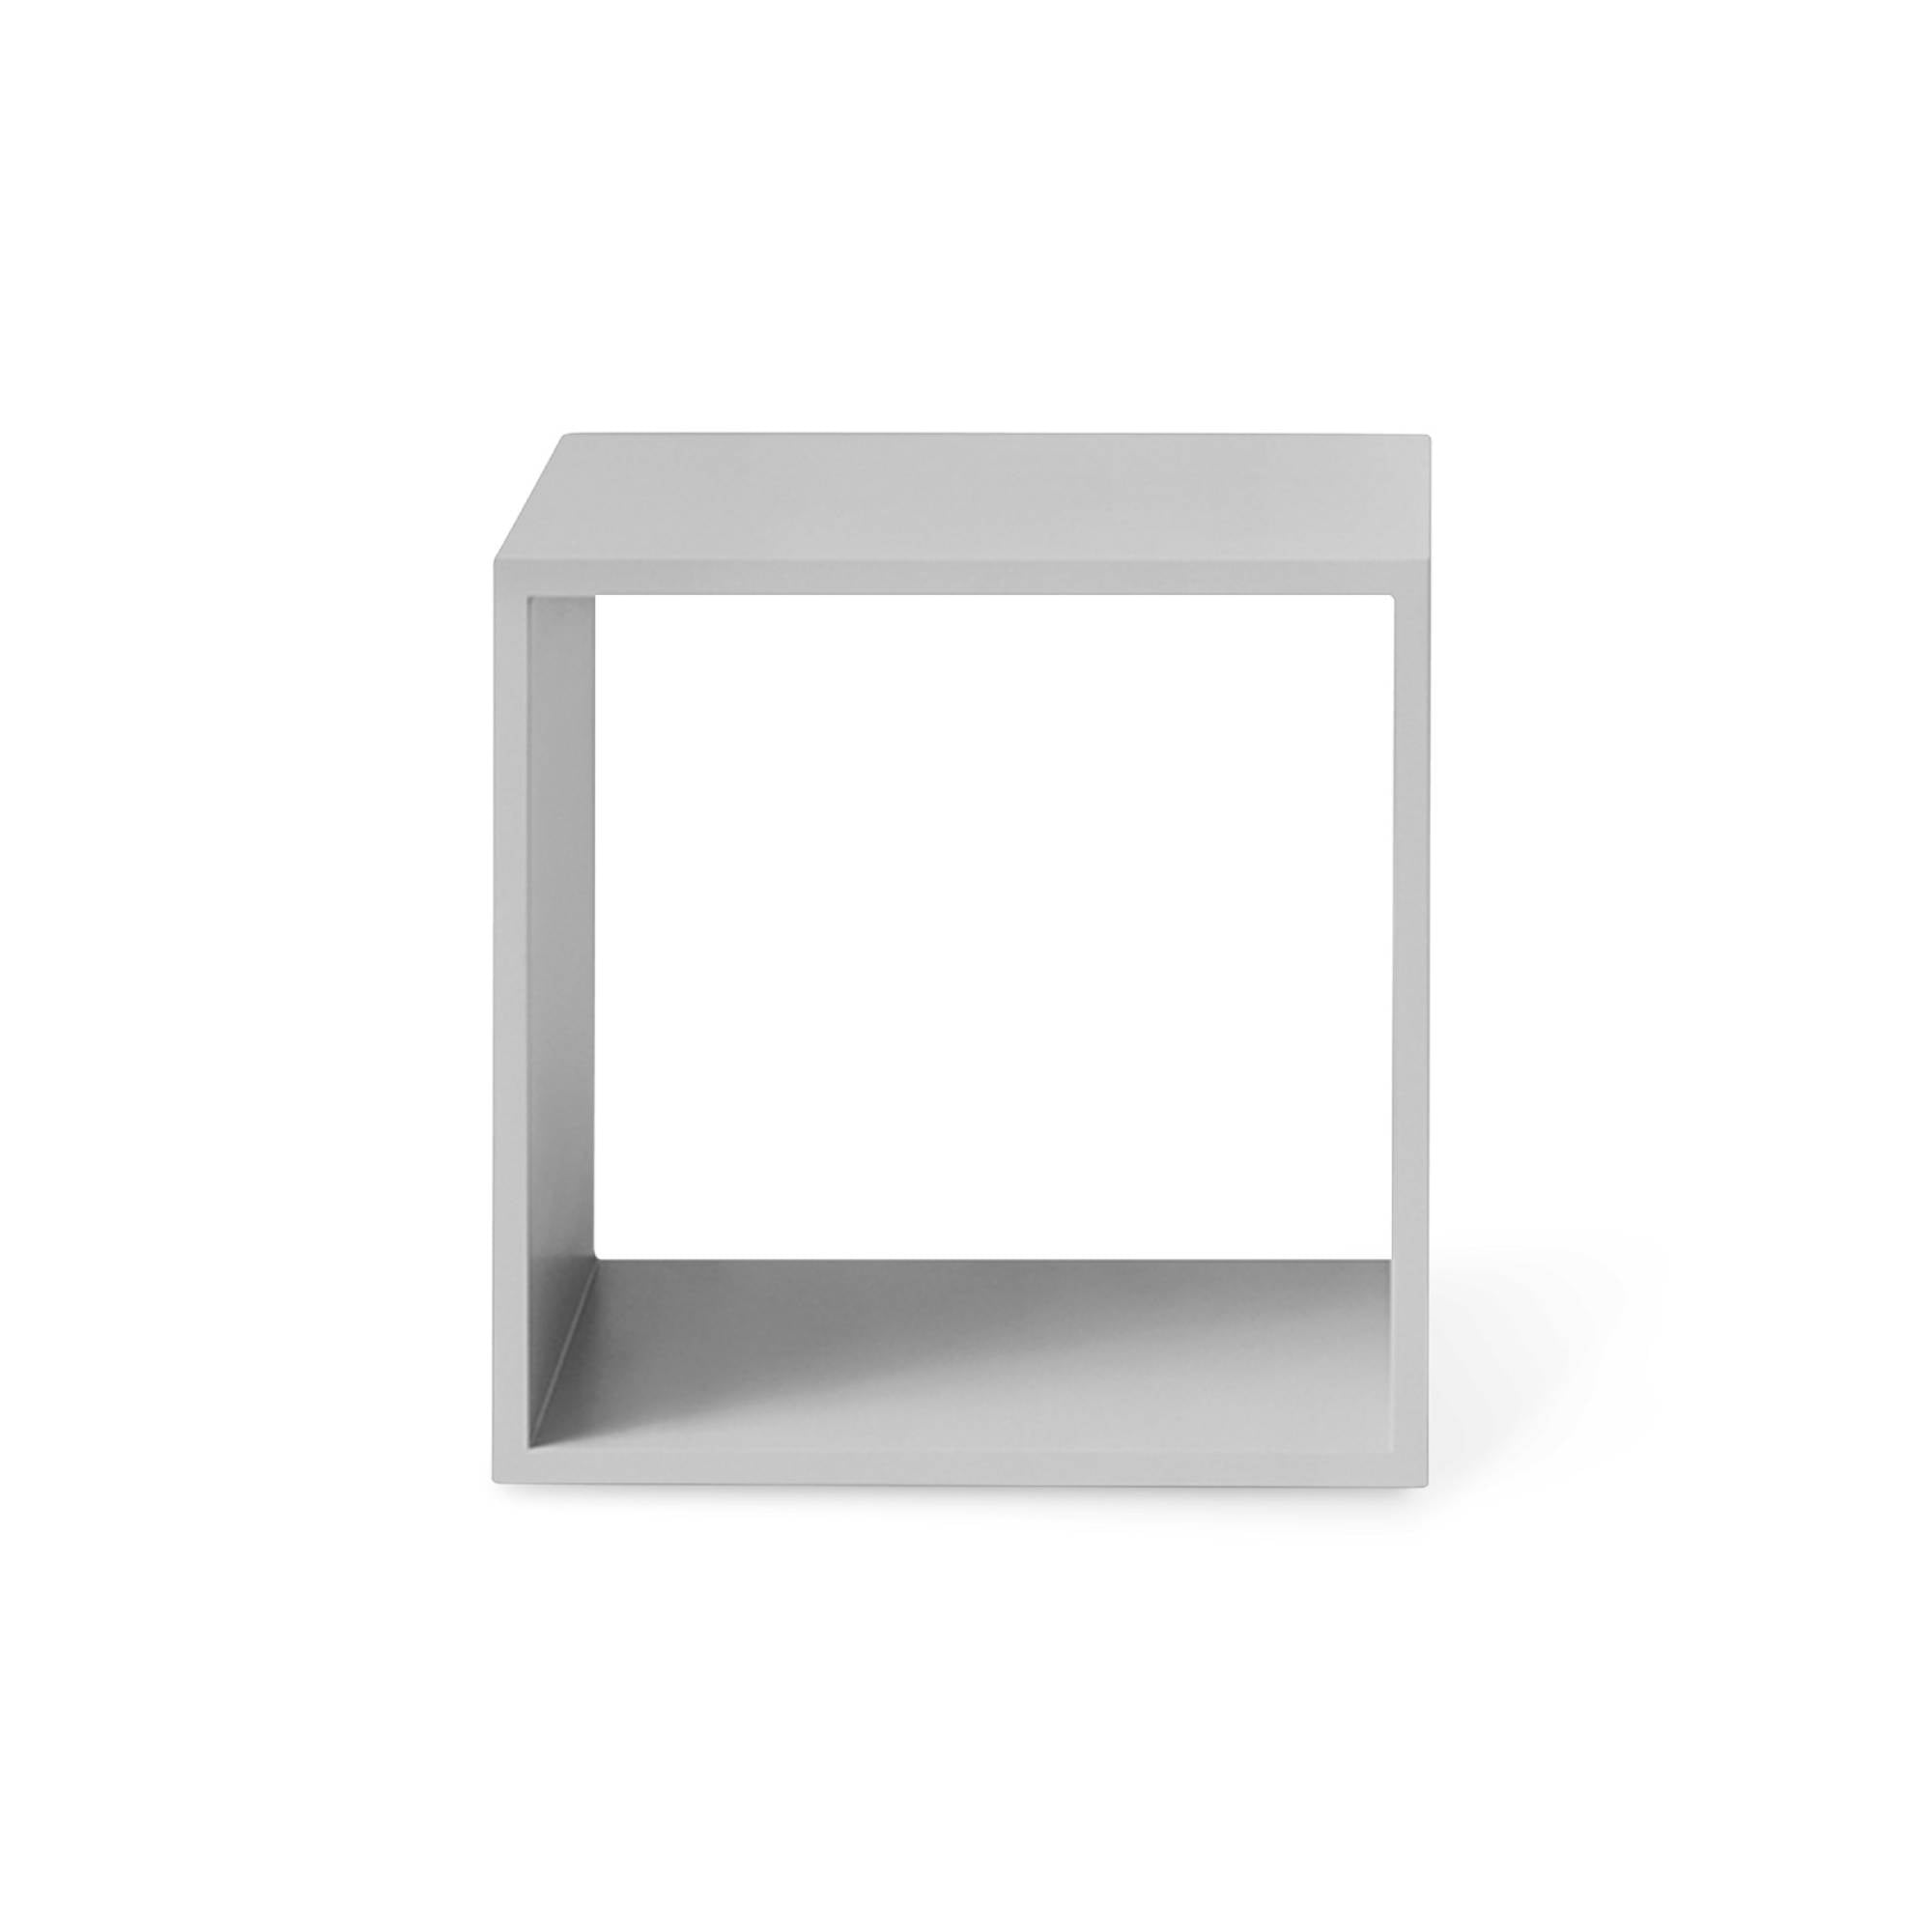 Stacked Storage 2.0: Open Module - Medium + Light Grey